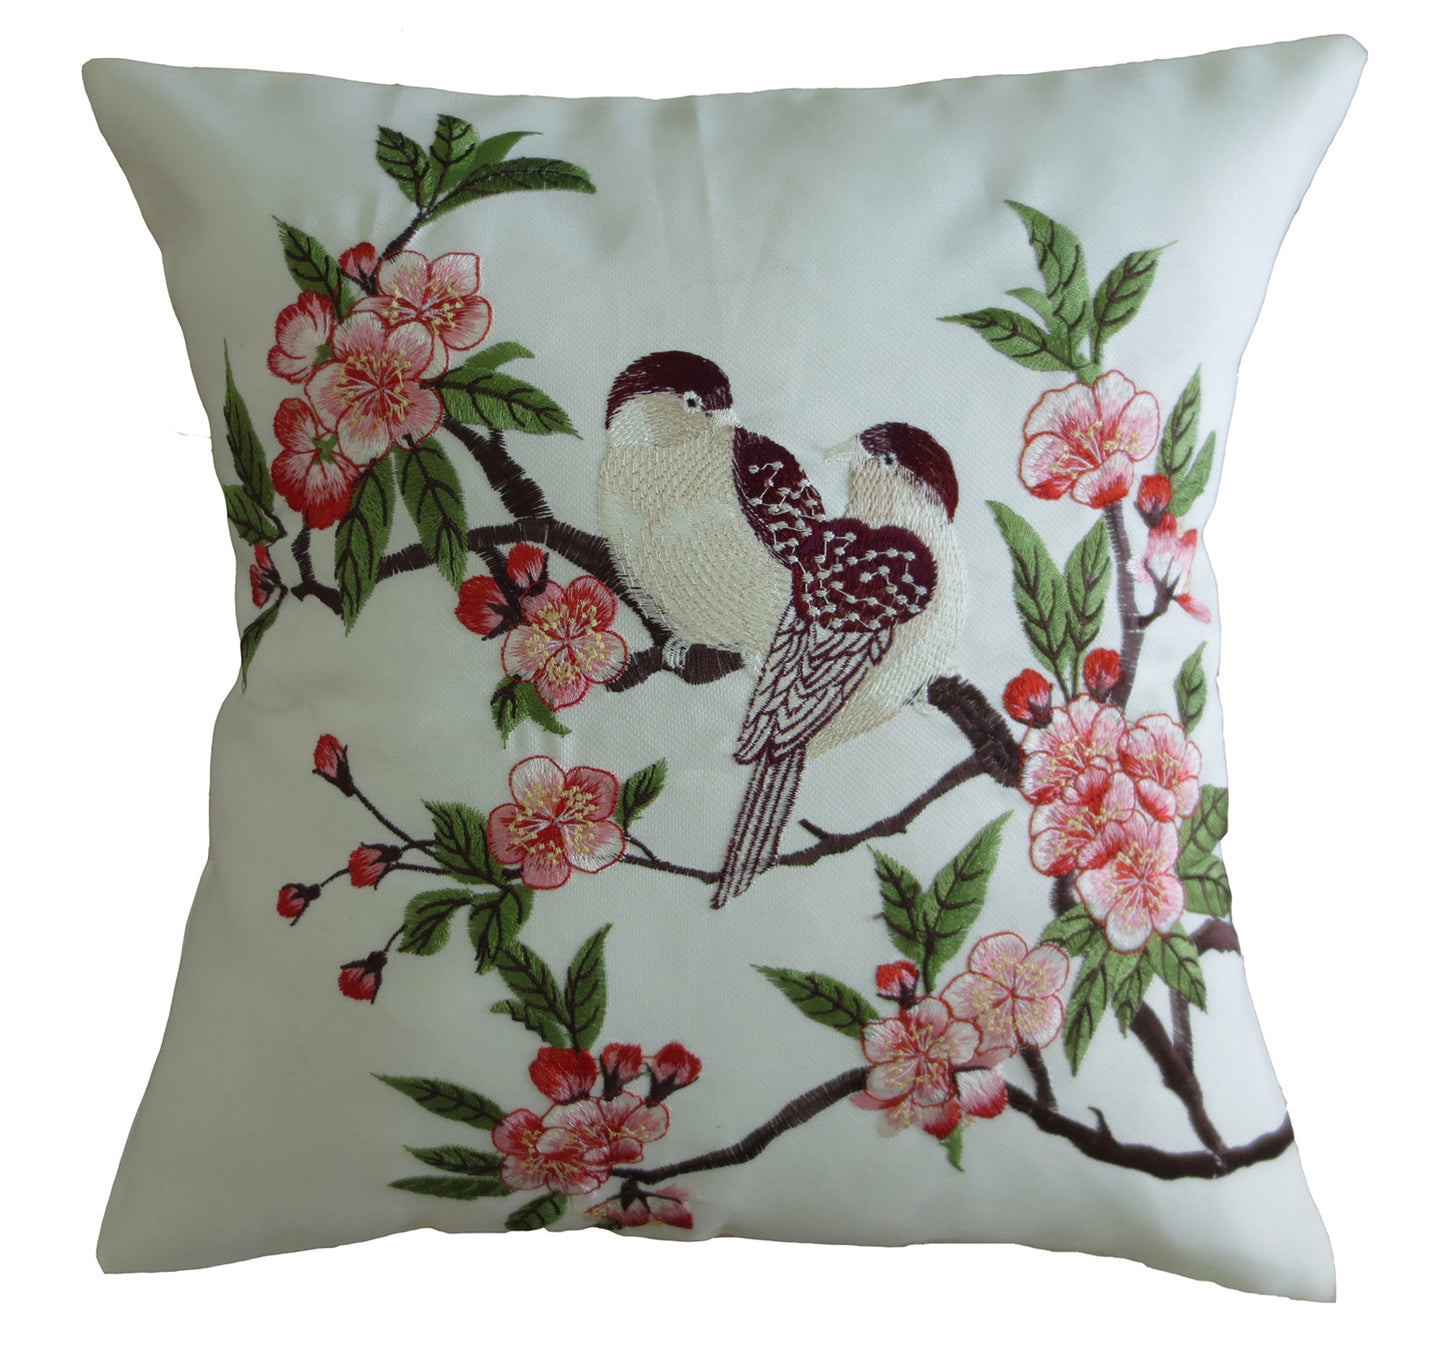 Mante Carlo Fine Burlap Decorative Throw Pillow Covers